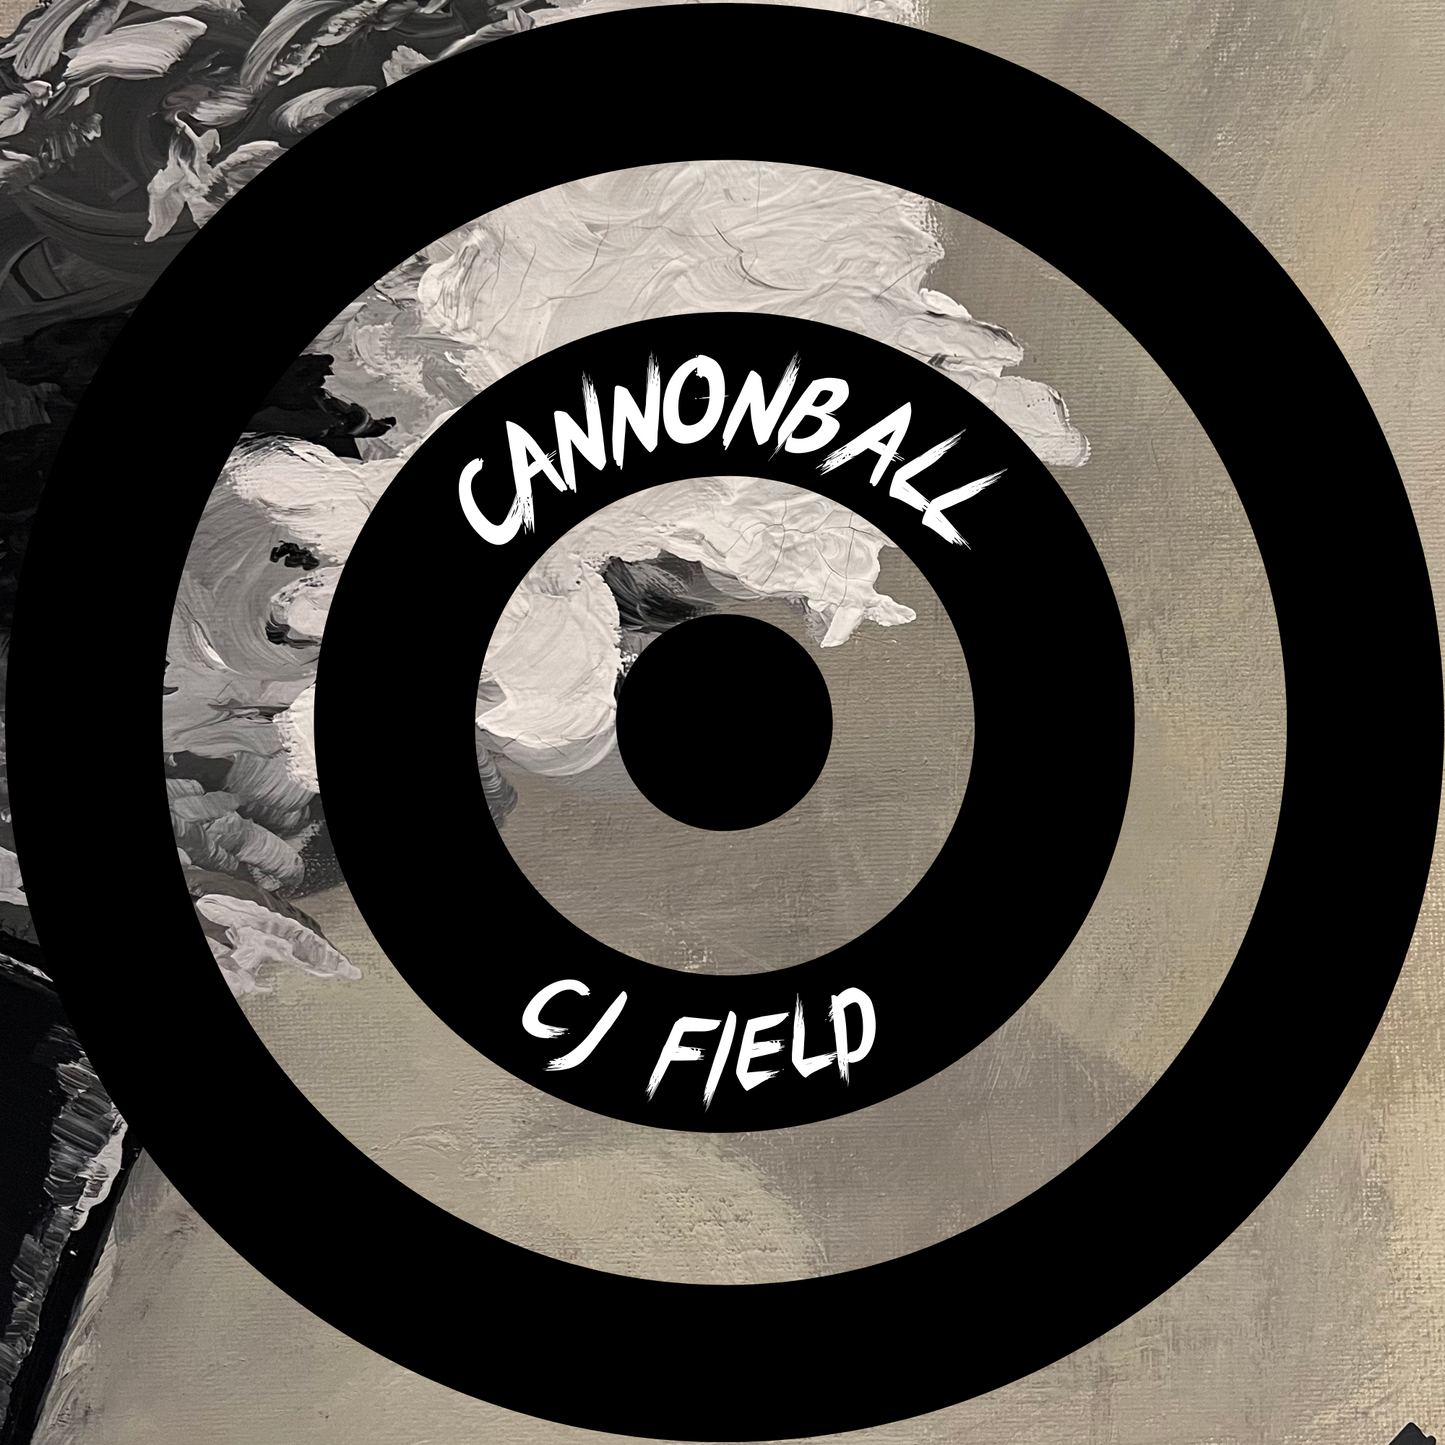 Cannonball Vinyl Record - Preorder